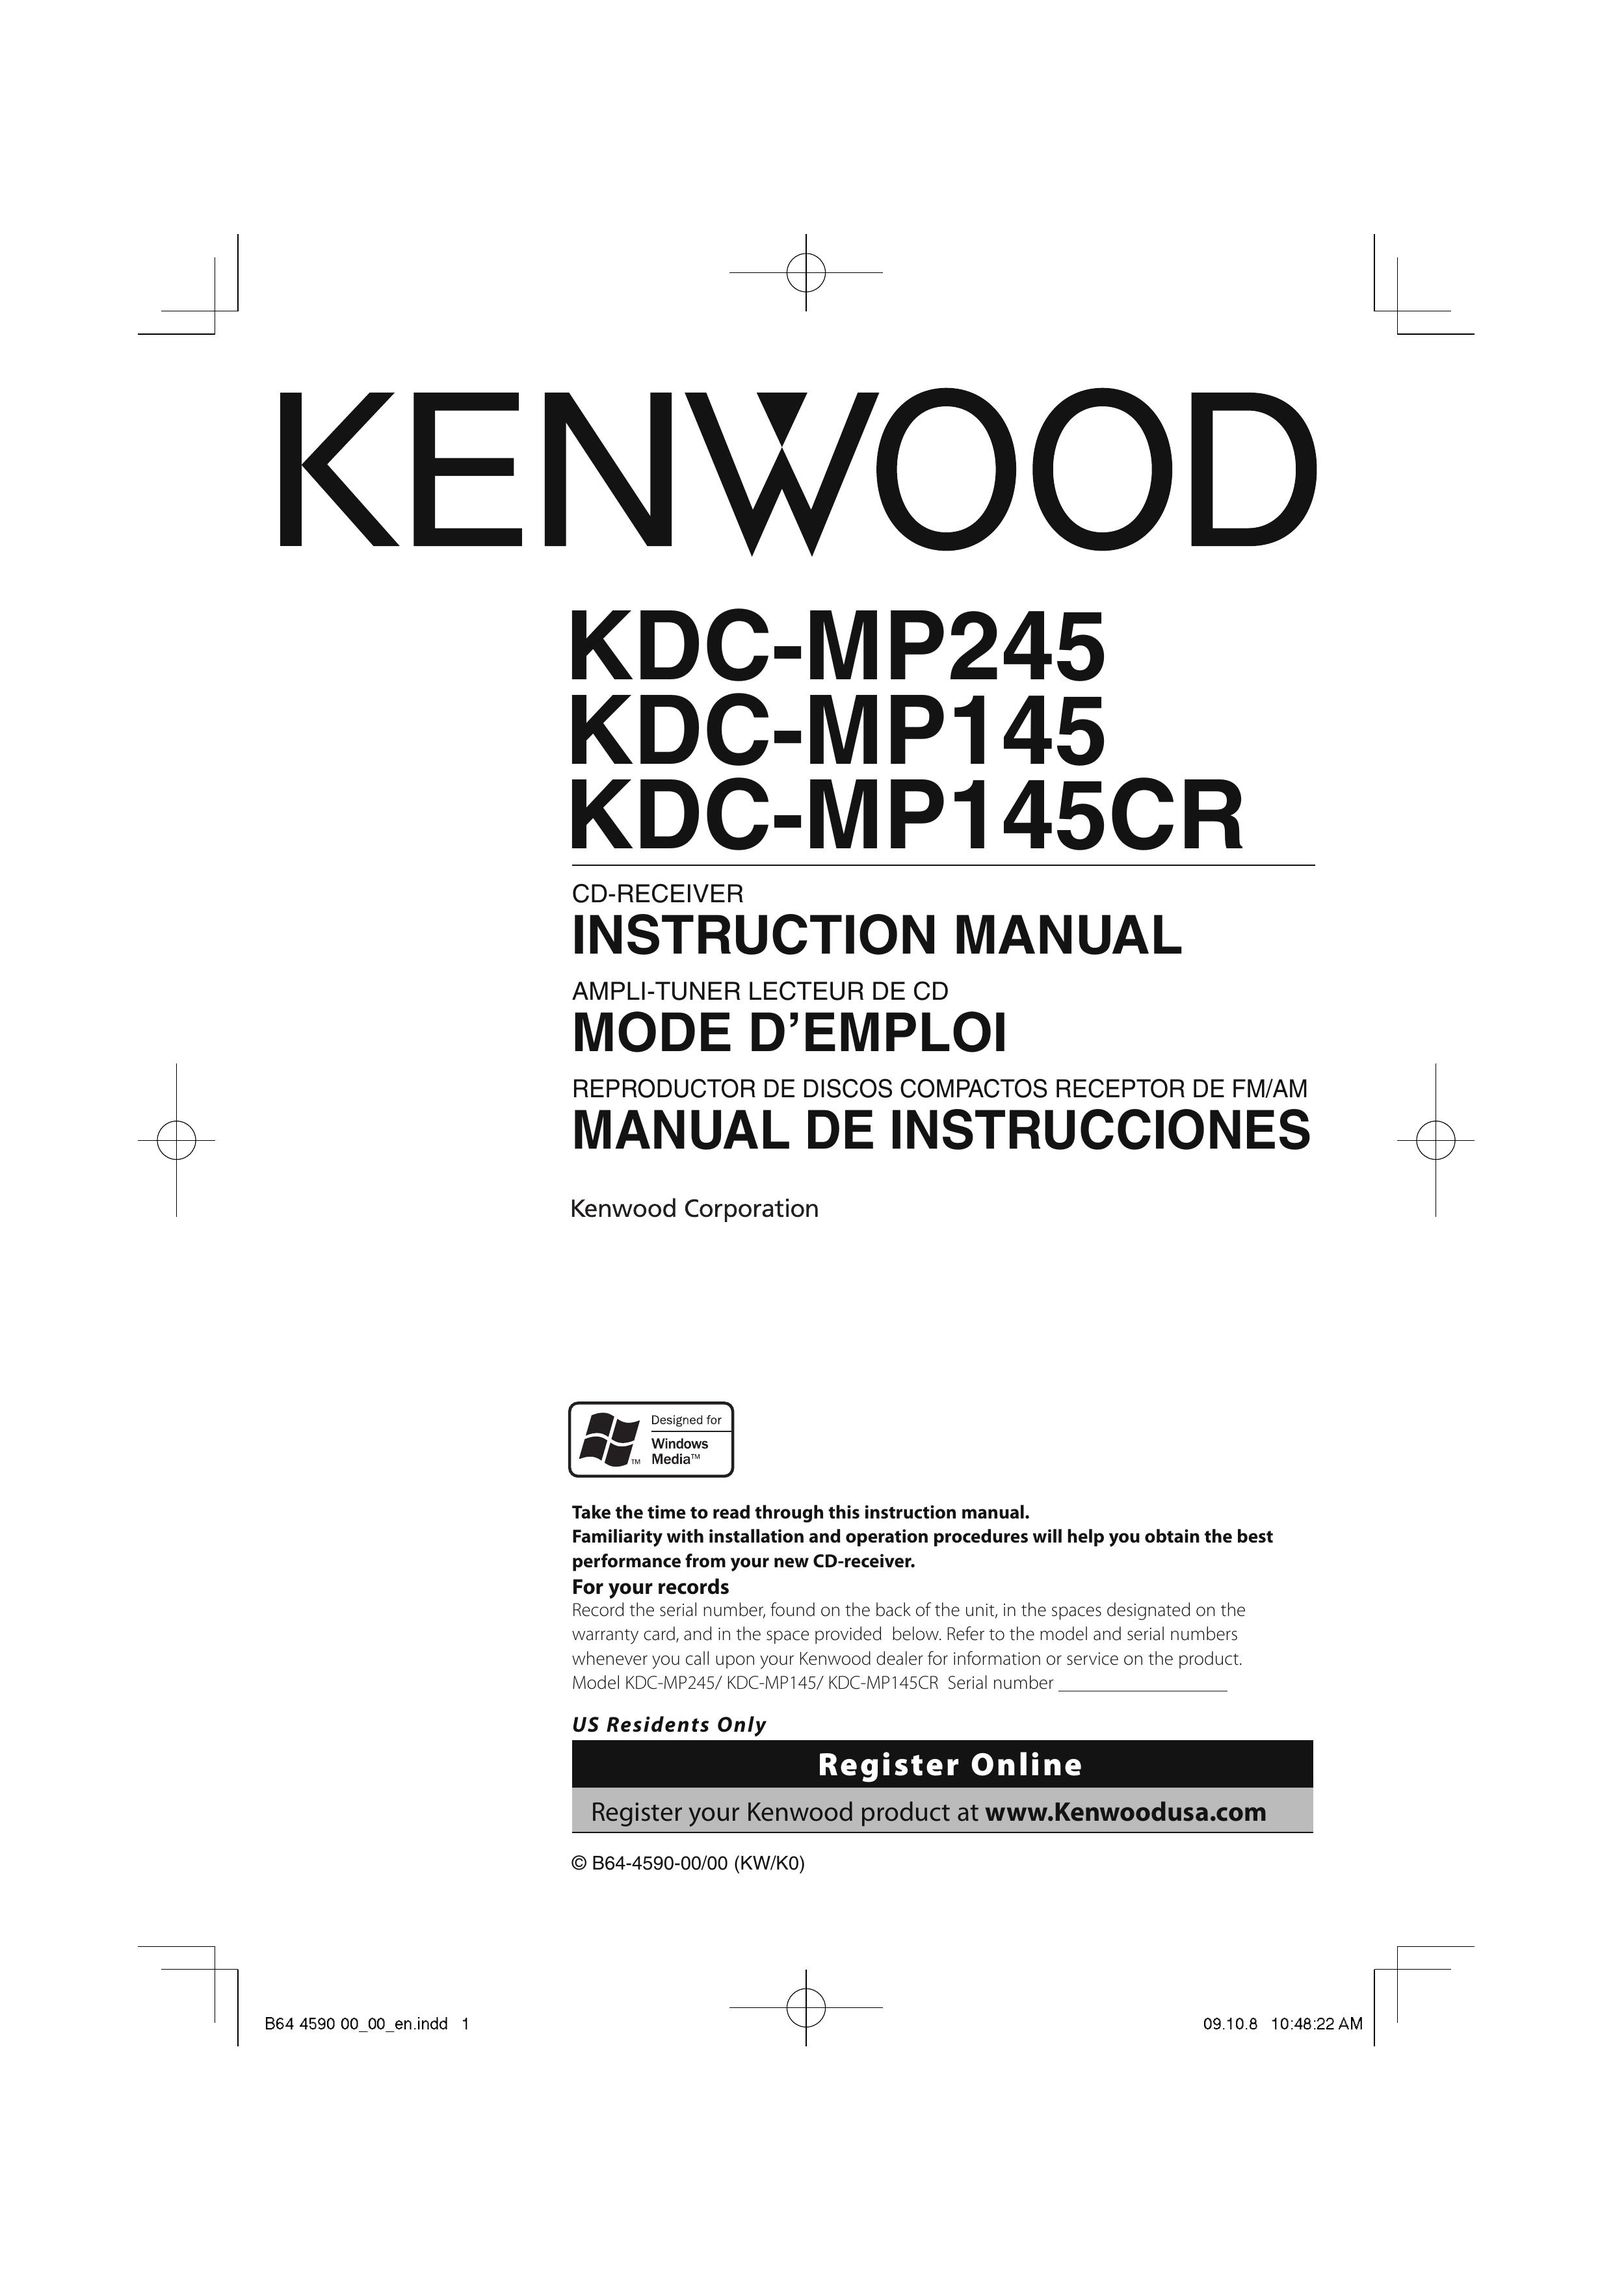 Kenwood KDC-MP245 Car Speaker User Manual